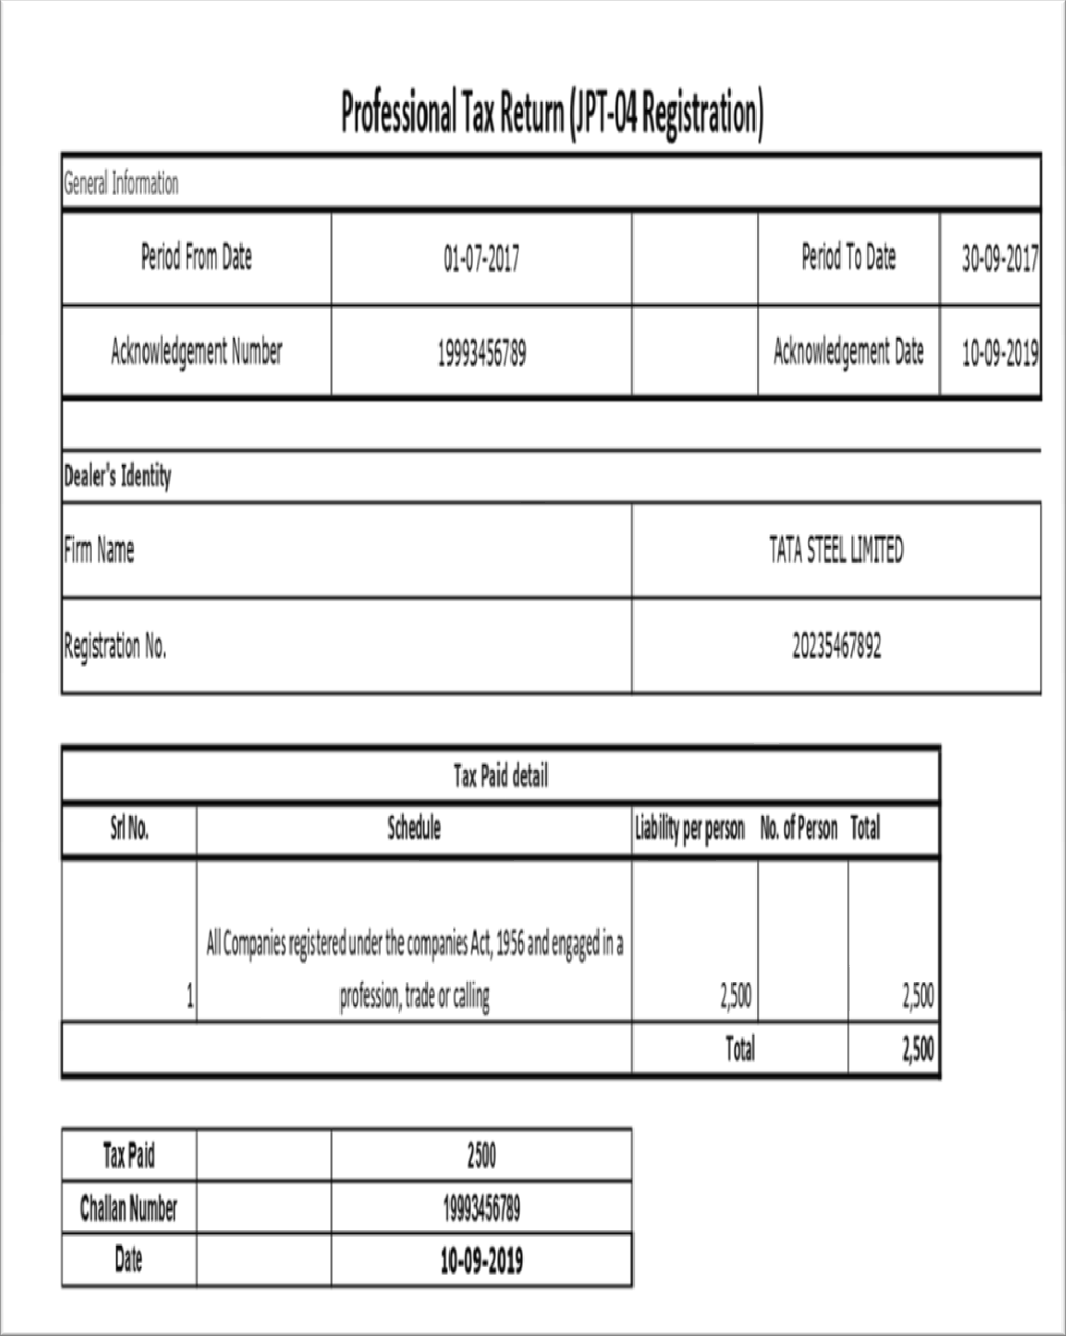 Example of Form JPT-04 Registration